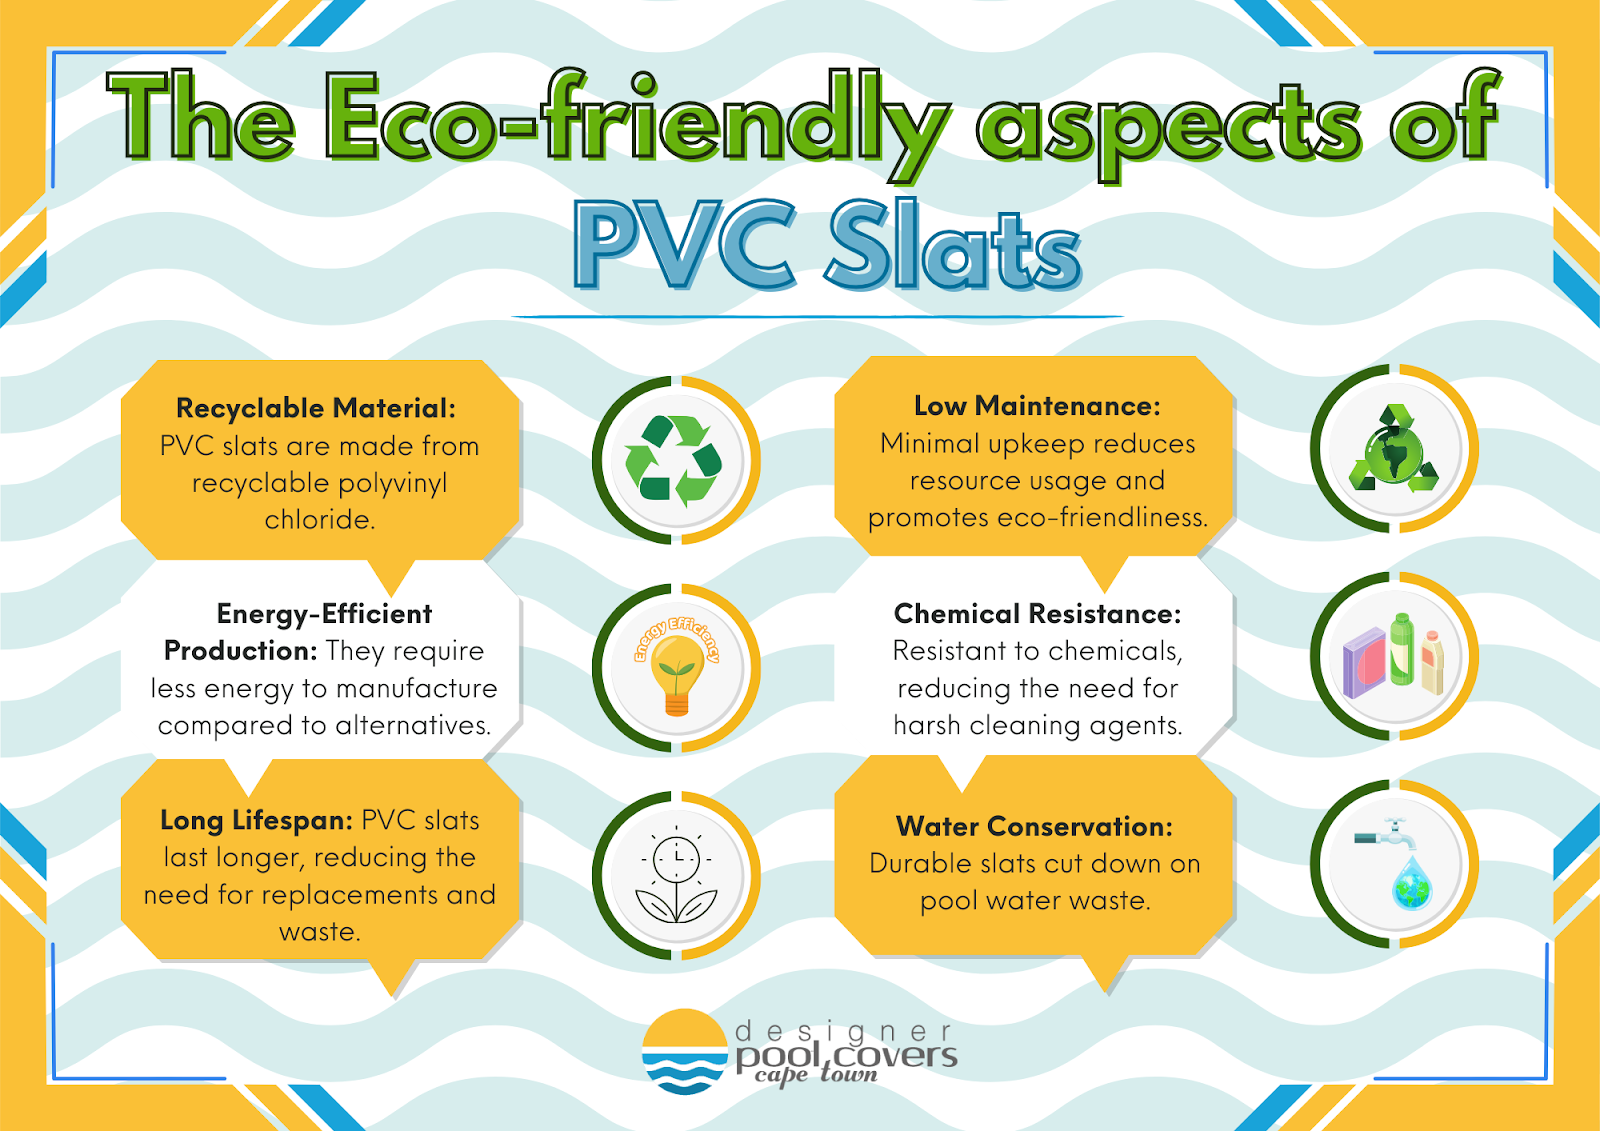 The Eco-friendly aspects of PVC slats
